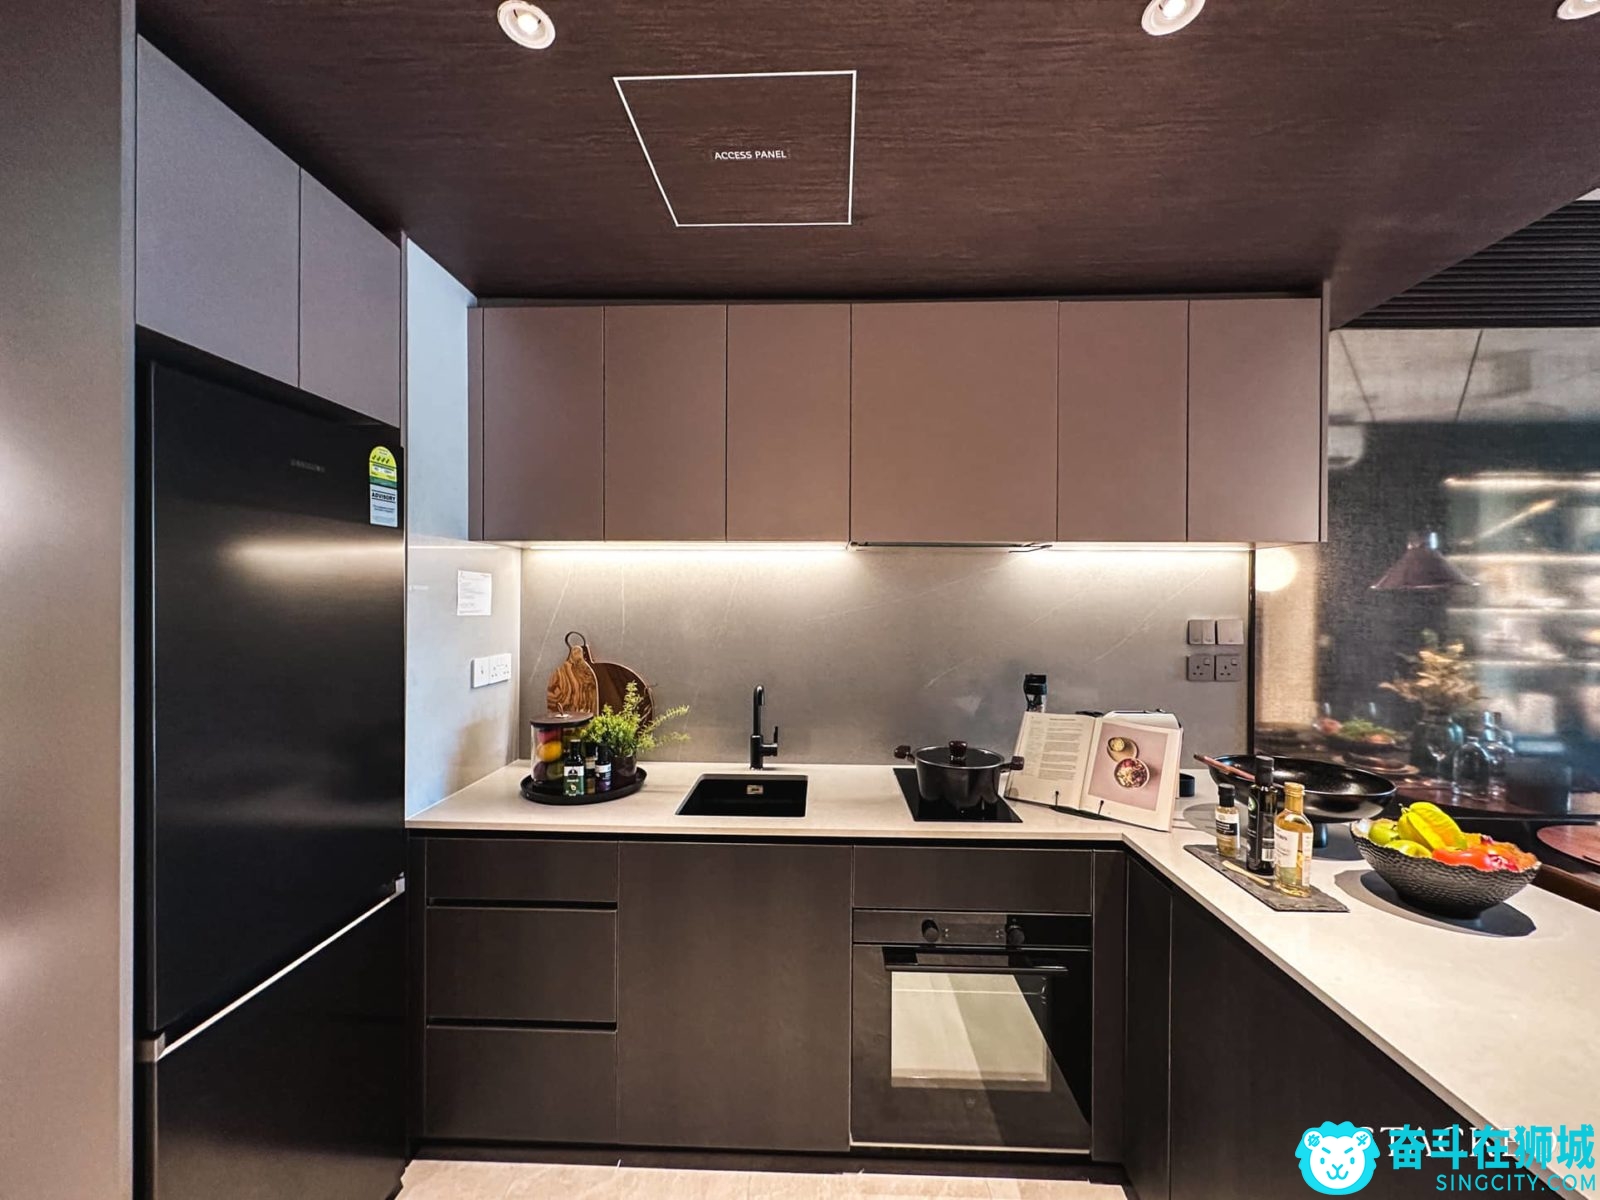 the-continuum-2-bedroom-study-kitchen-1600x1200.jpg